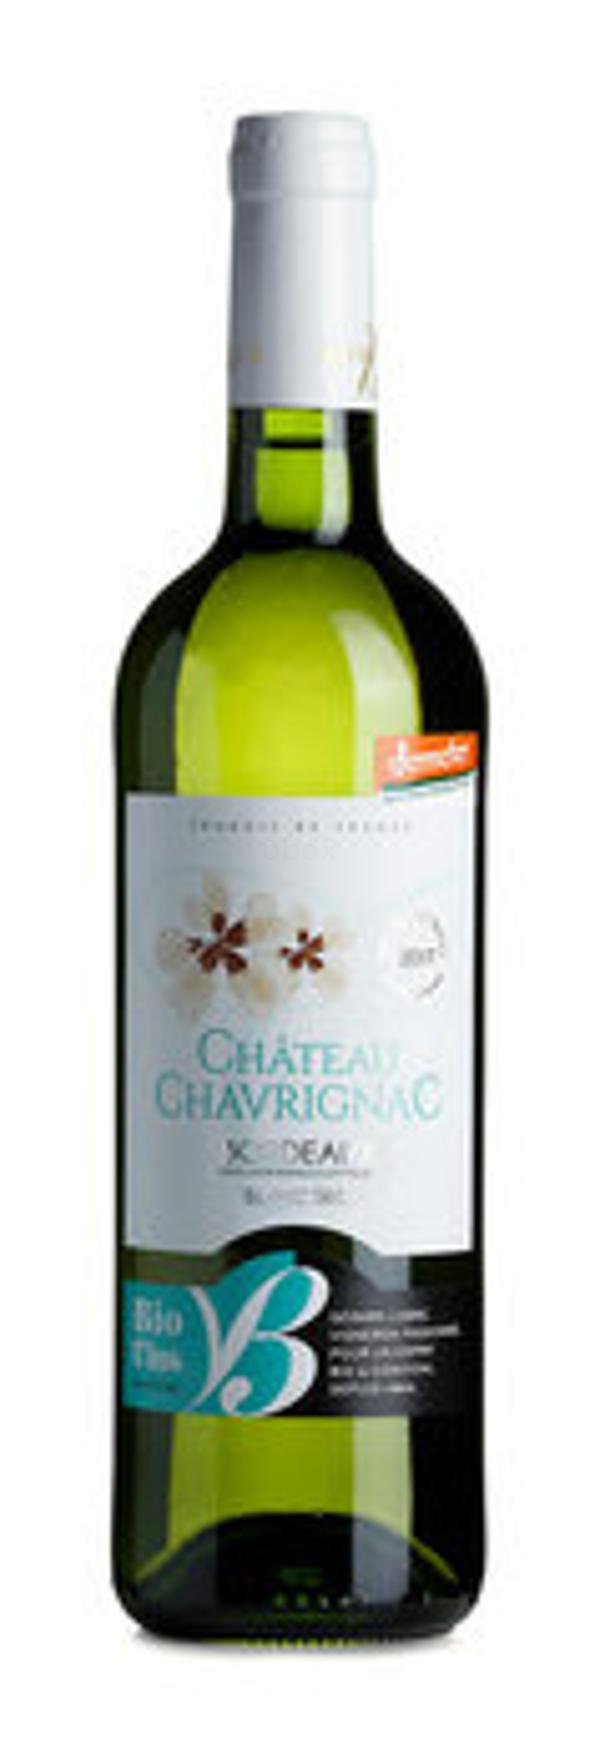 Produktfoto zu Bordeaux weiß,0,75l